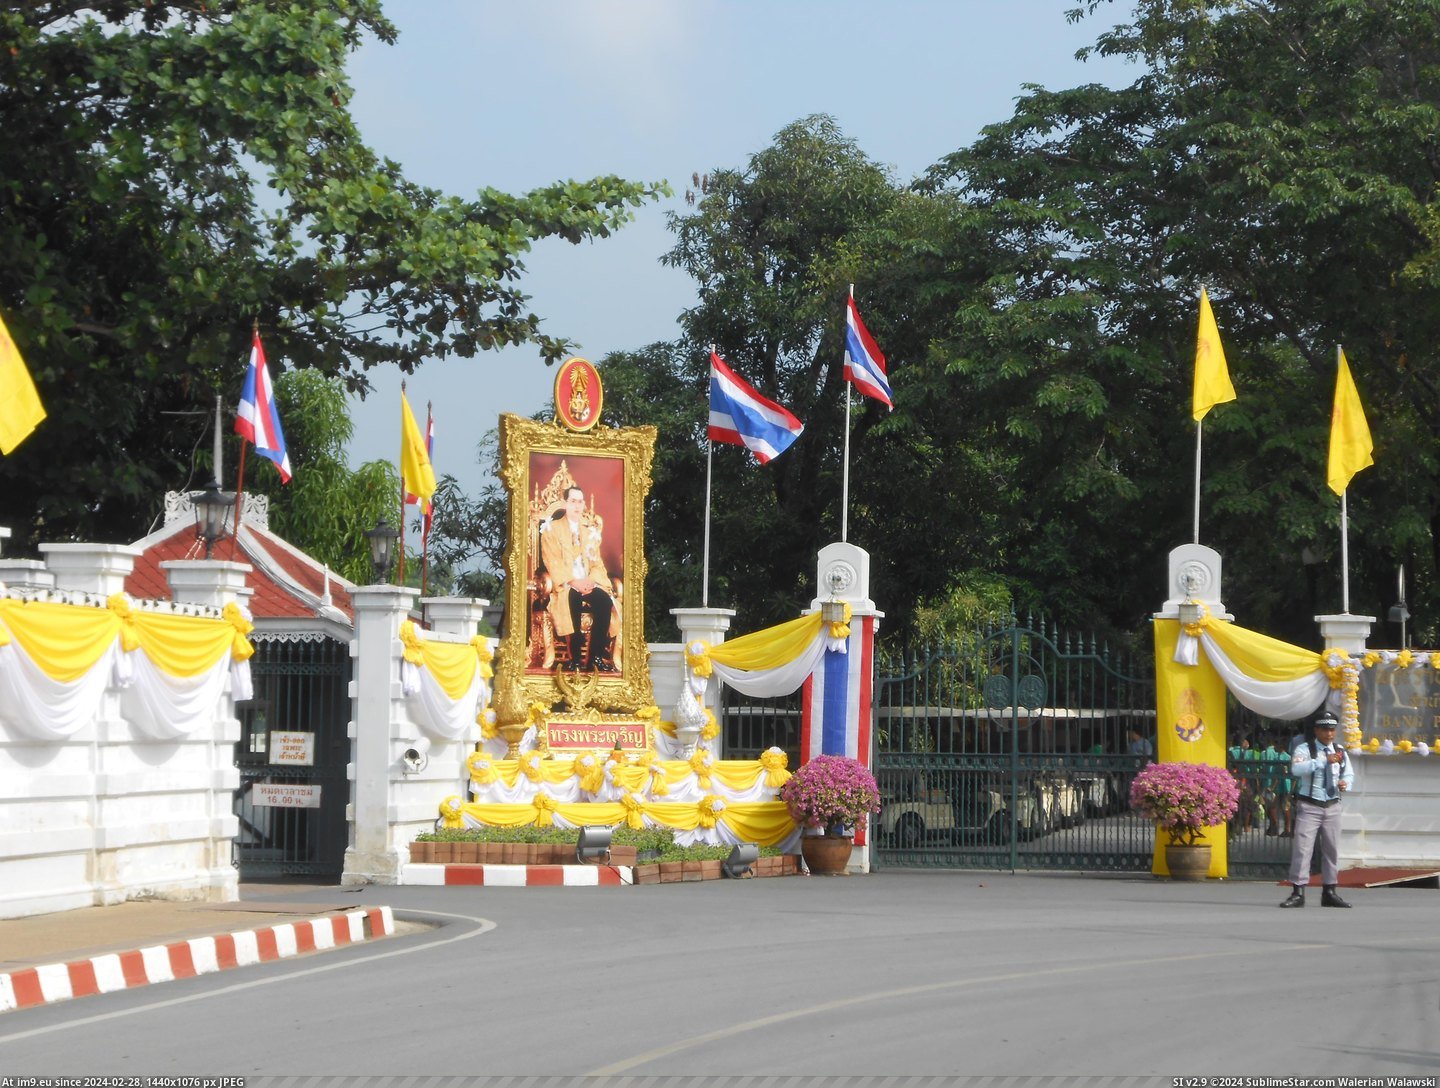  #Dscn0418  DSCN0418 Pic. (Image of album Anh di Thai Lan))